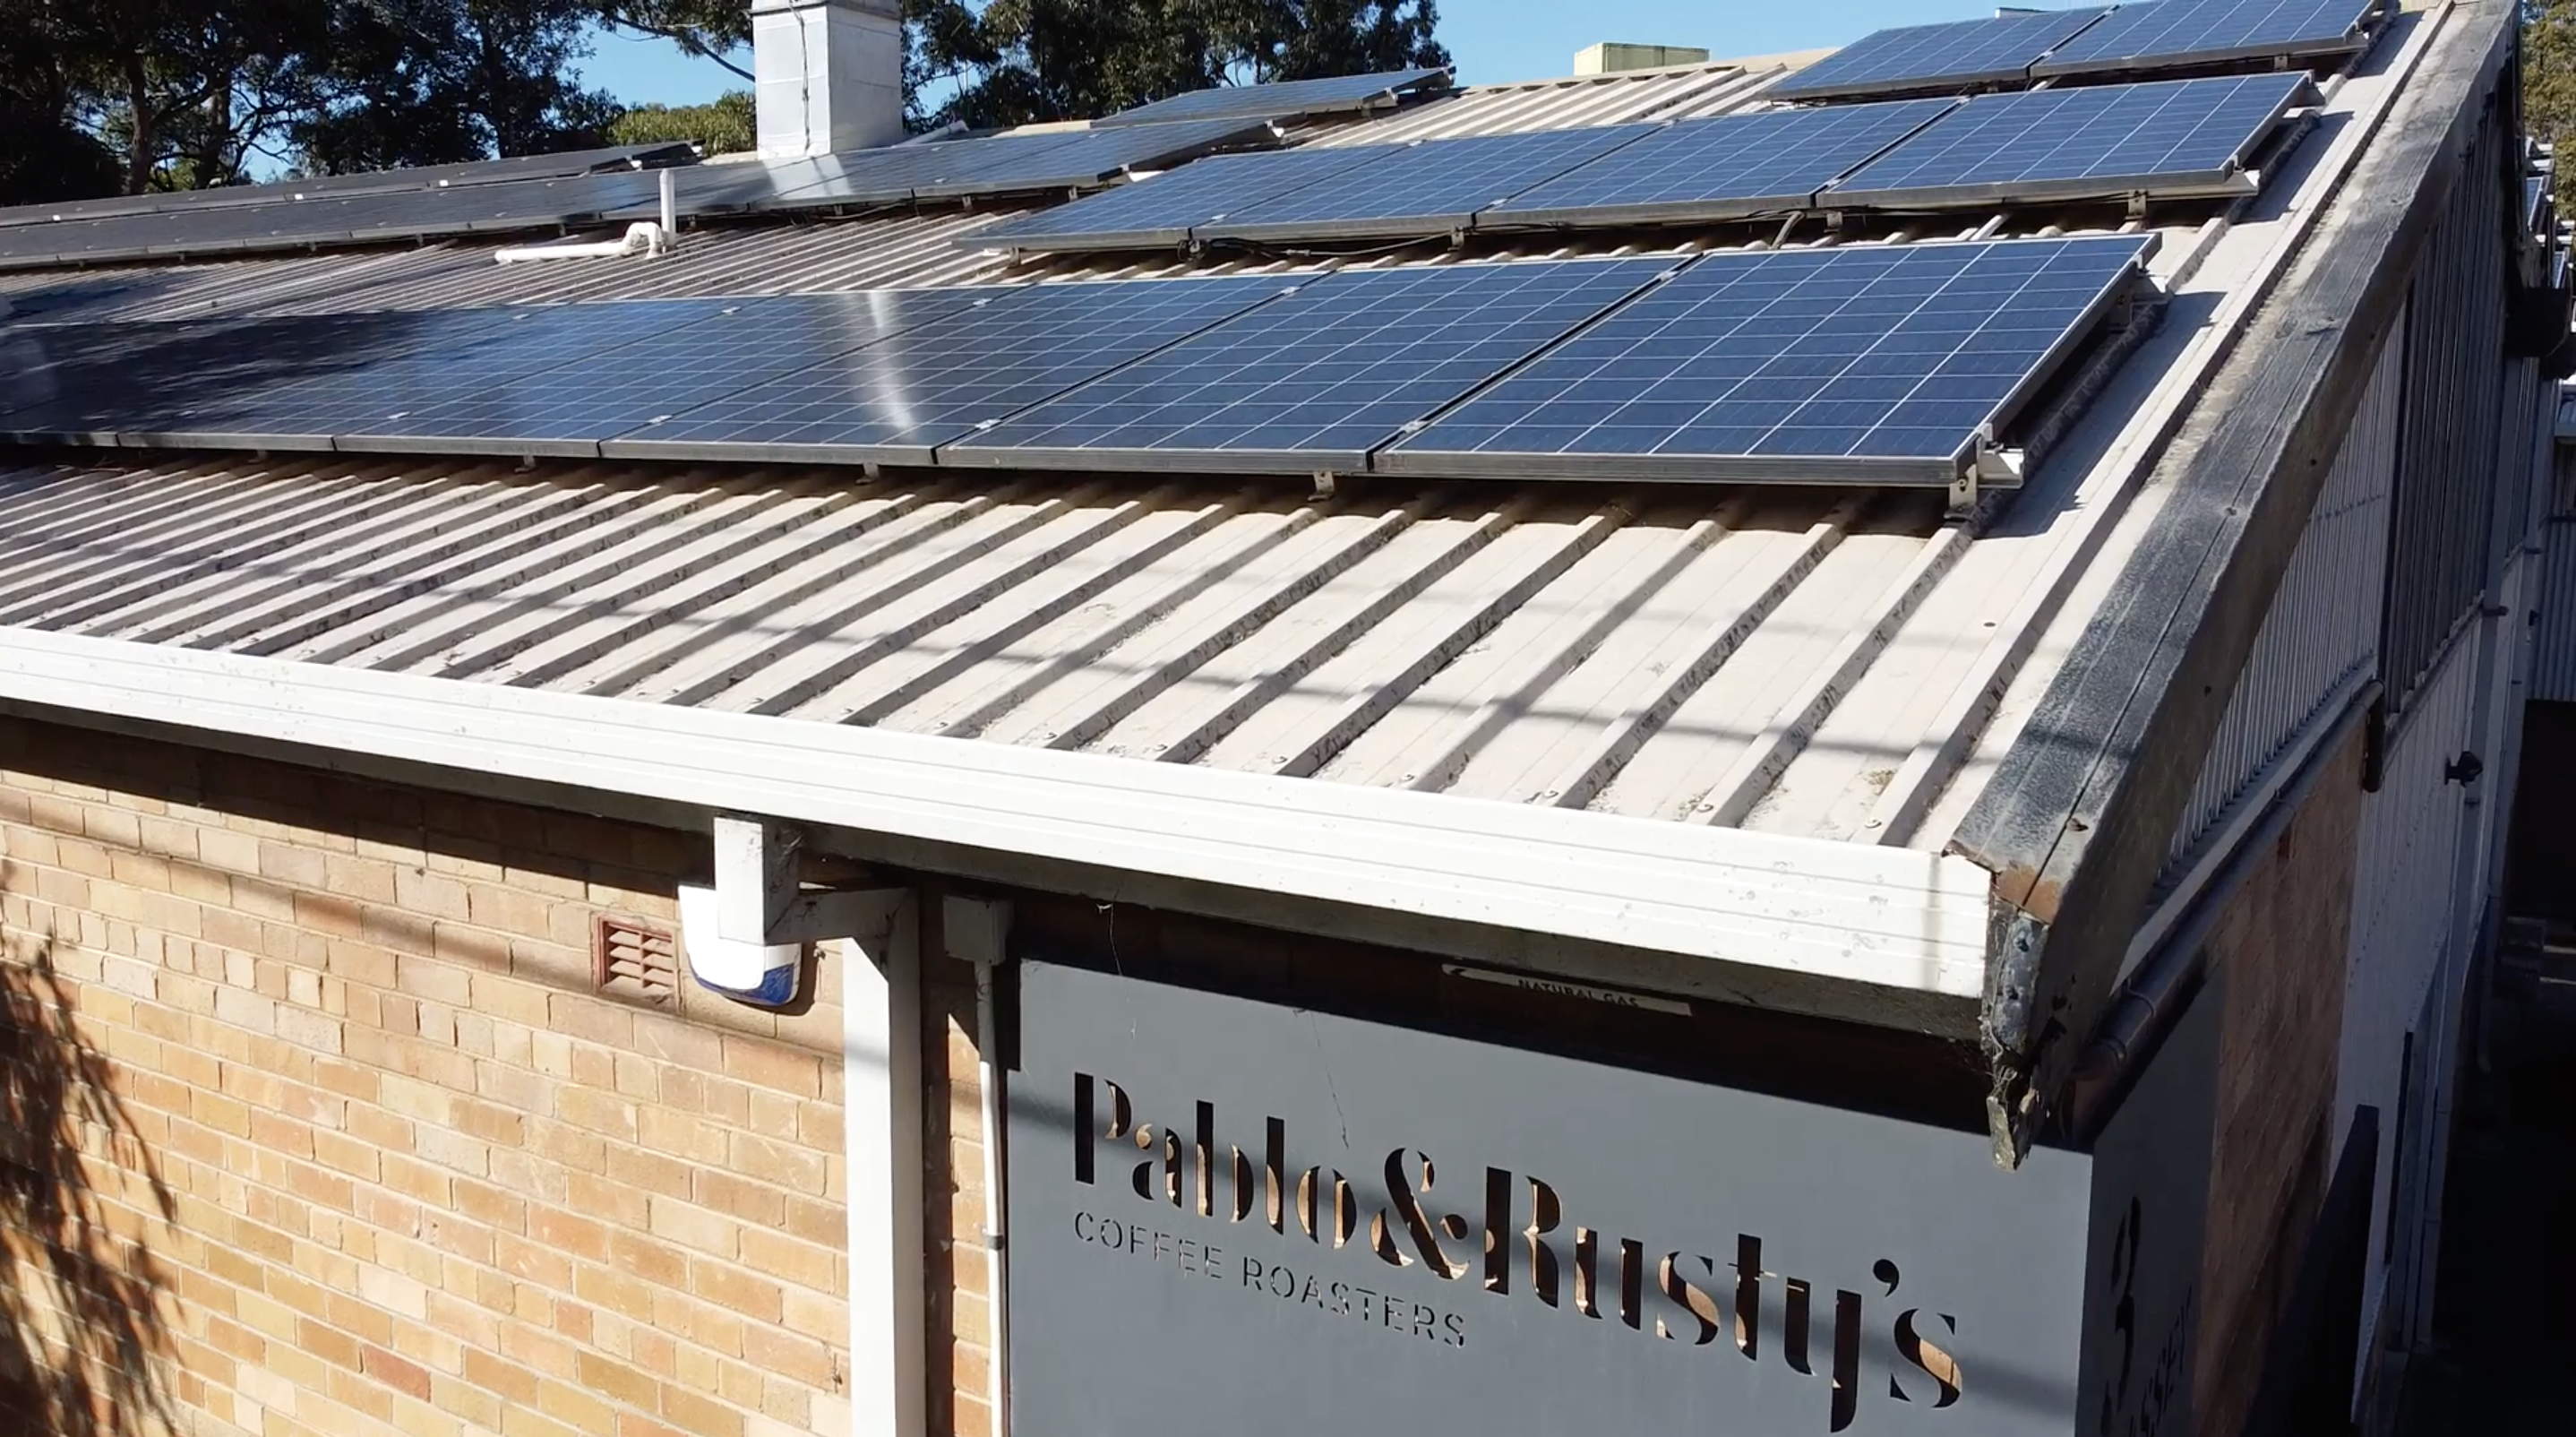 P&R rooftop solar panels 